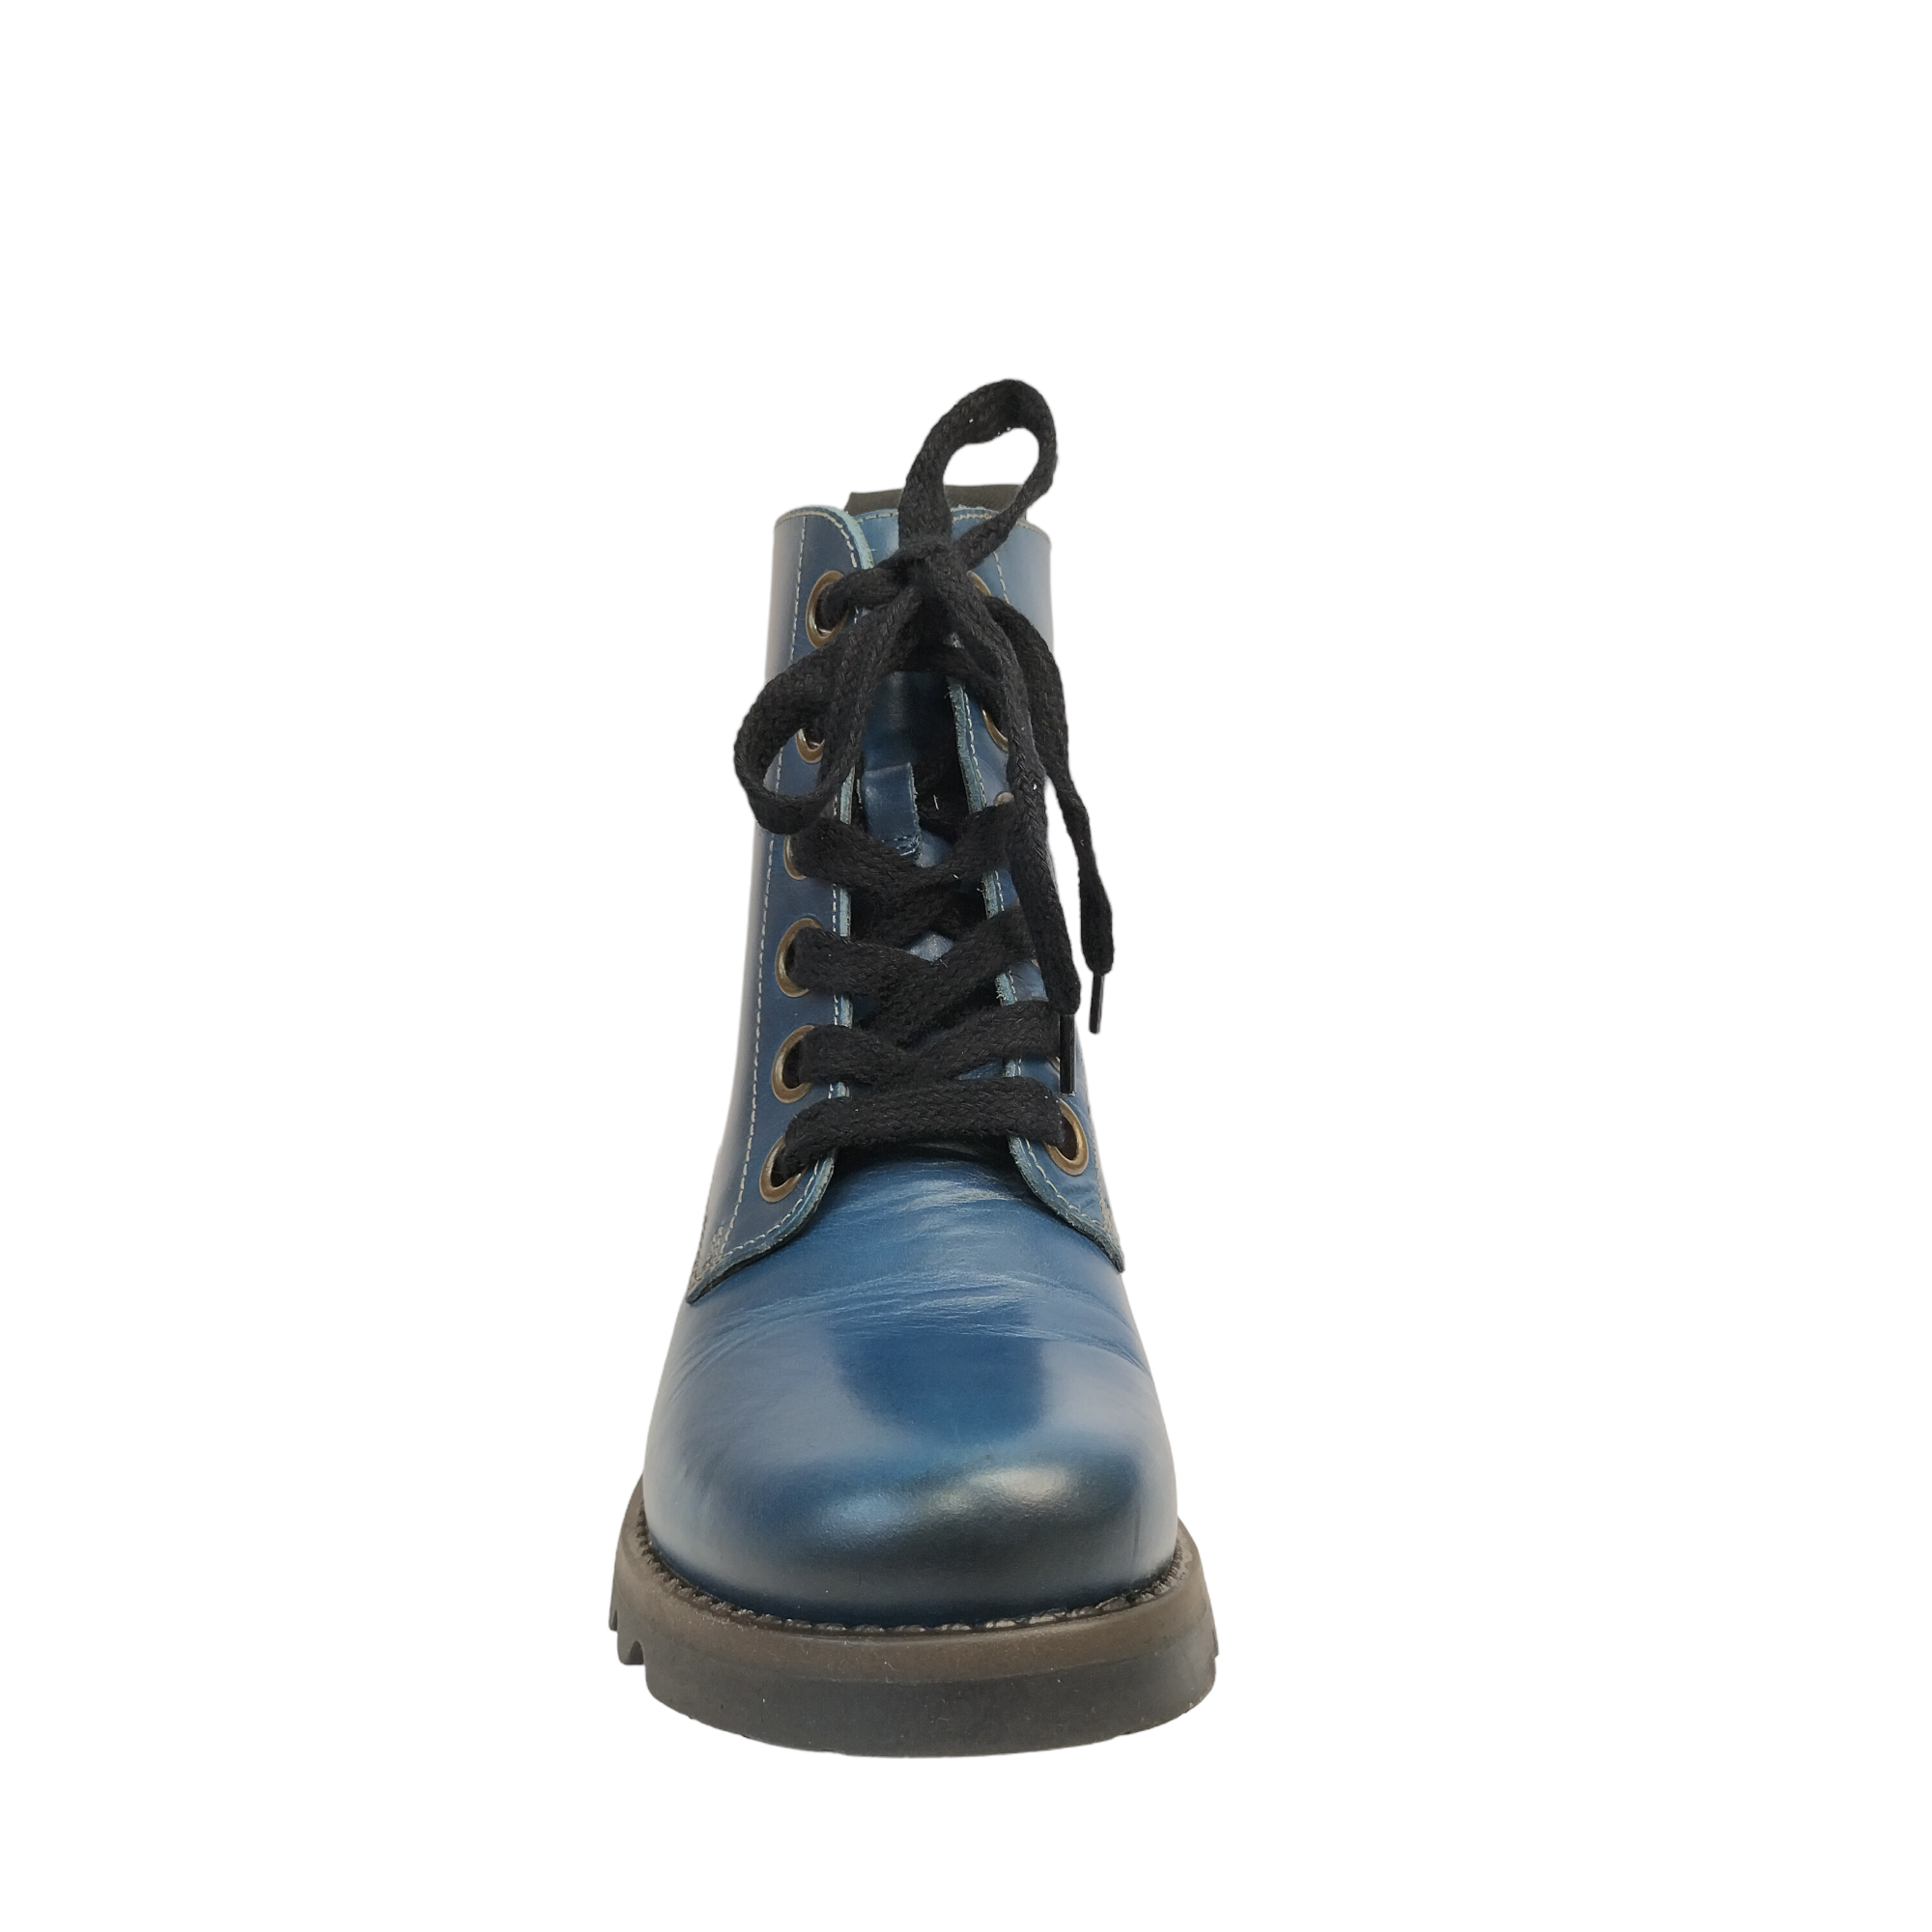 FLW23-Ragi - shoe&amp;me - Fly London - Boot - Boots, Winter, Womens